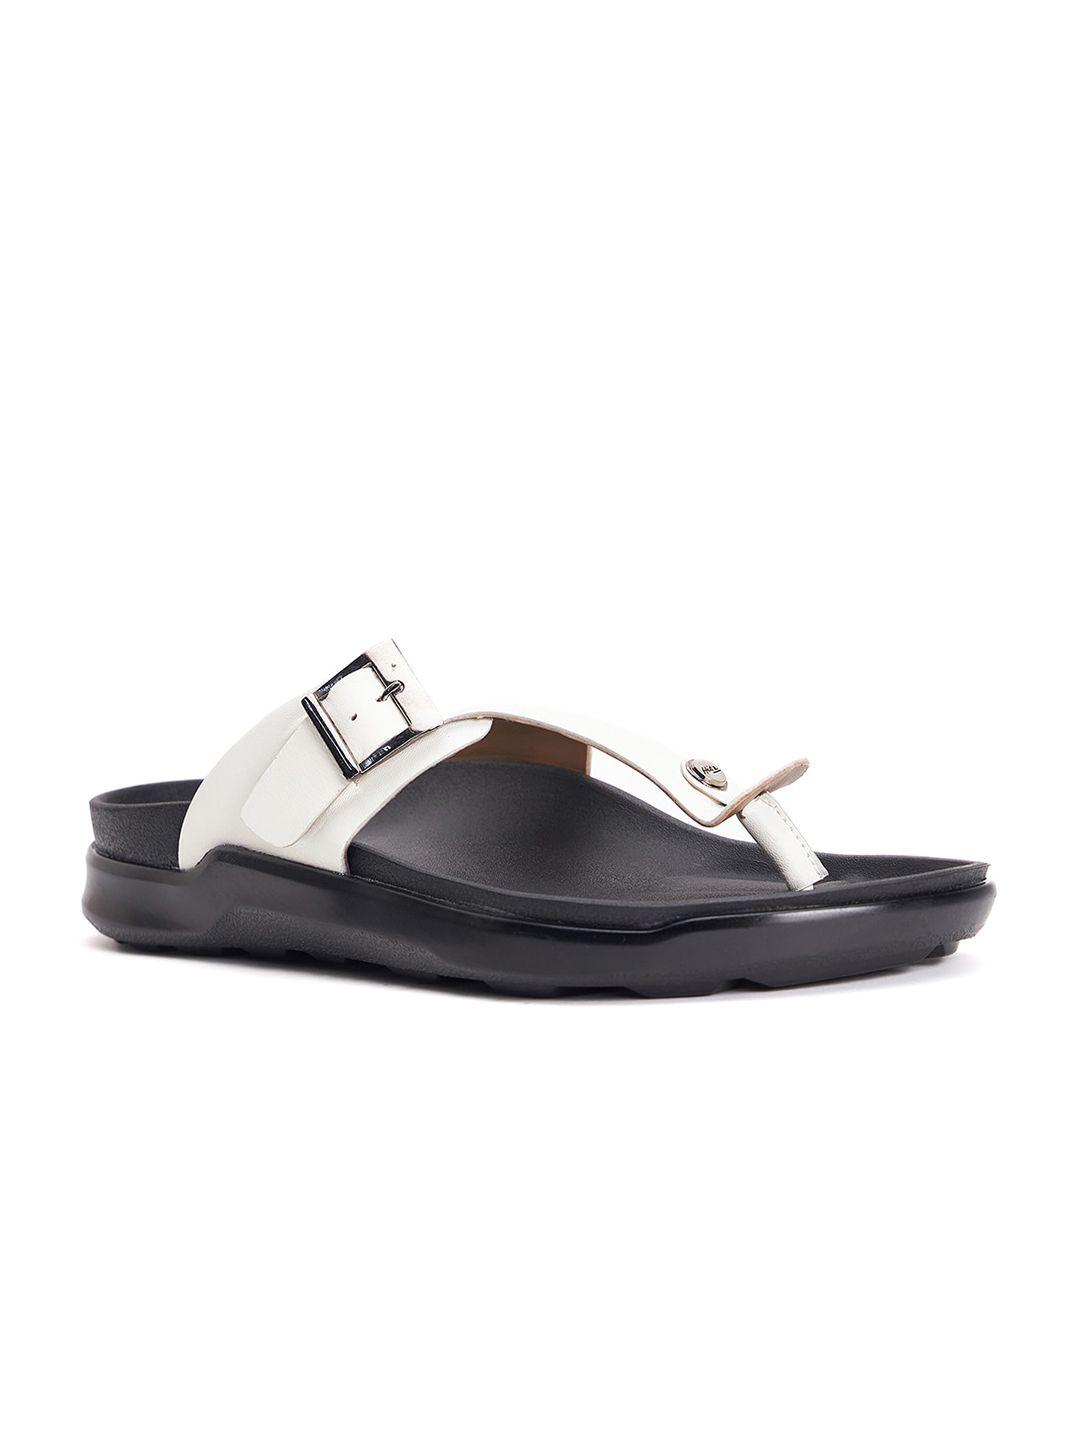 hitz-men-leather-comfort-sandals-with-buckle-detail